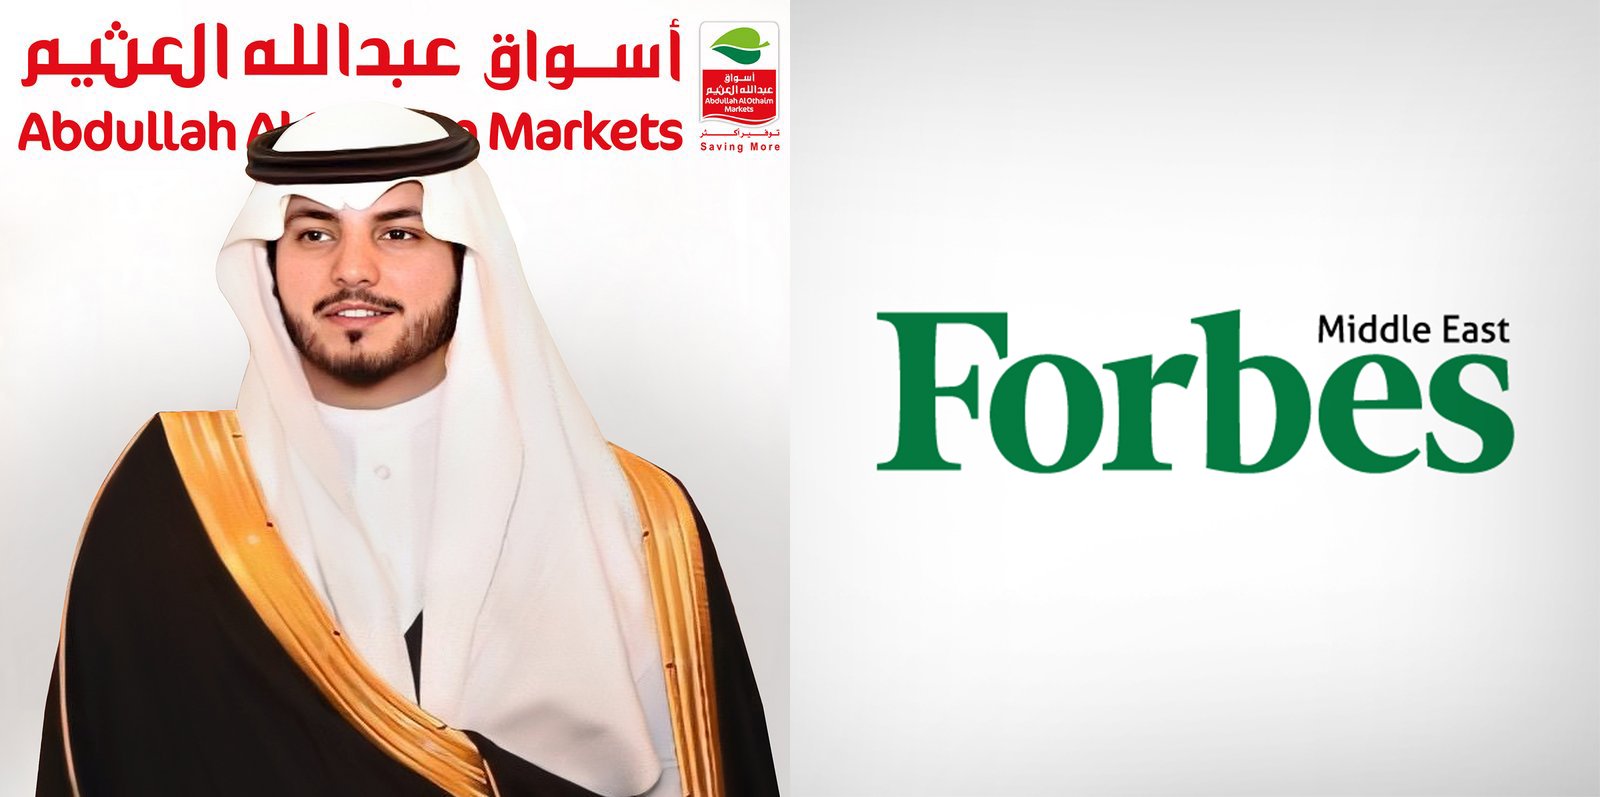 middle-east abdullah othaim markets companies